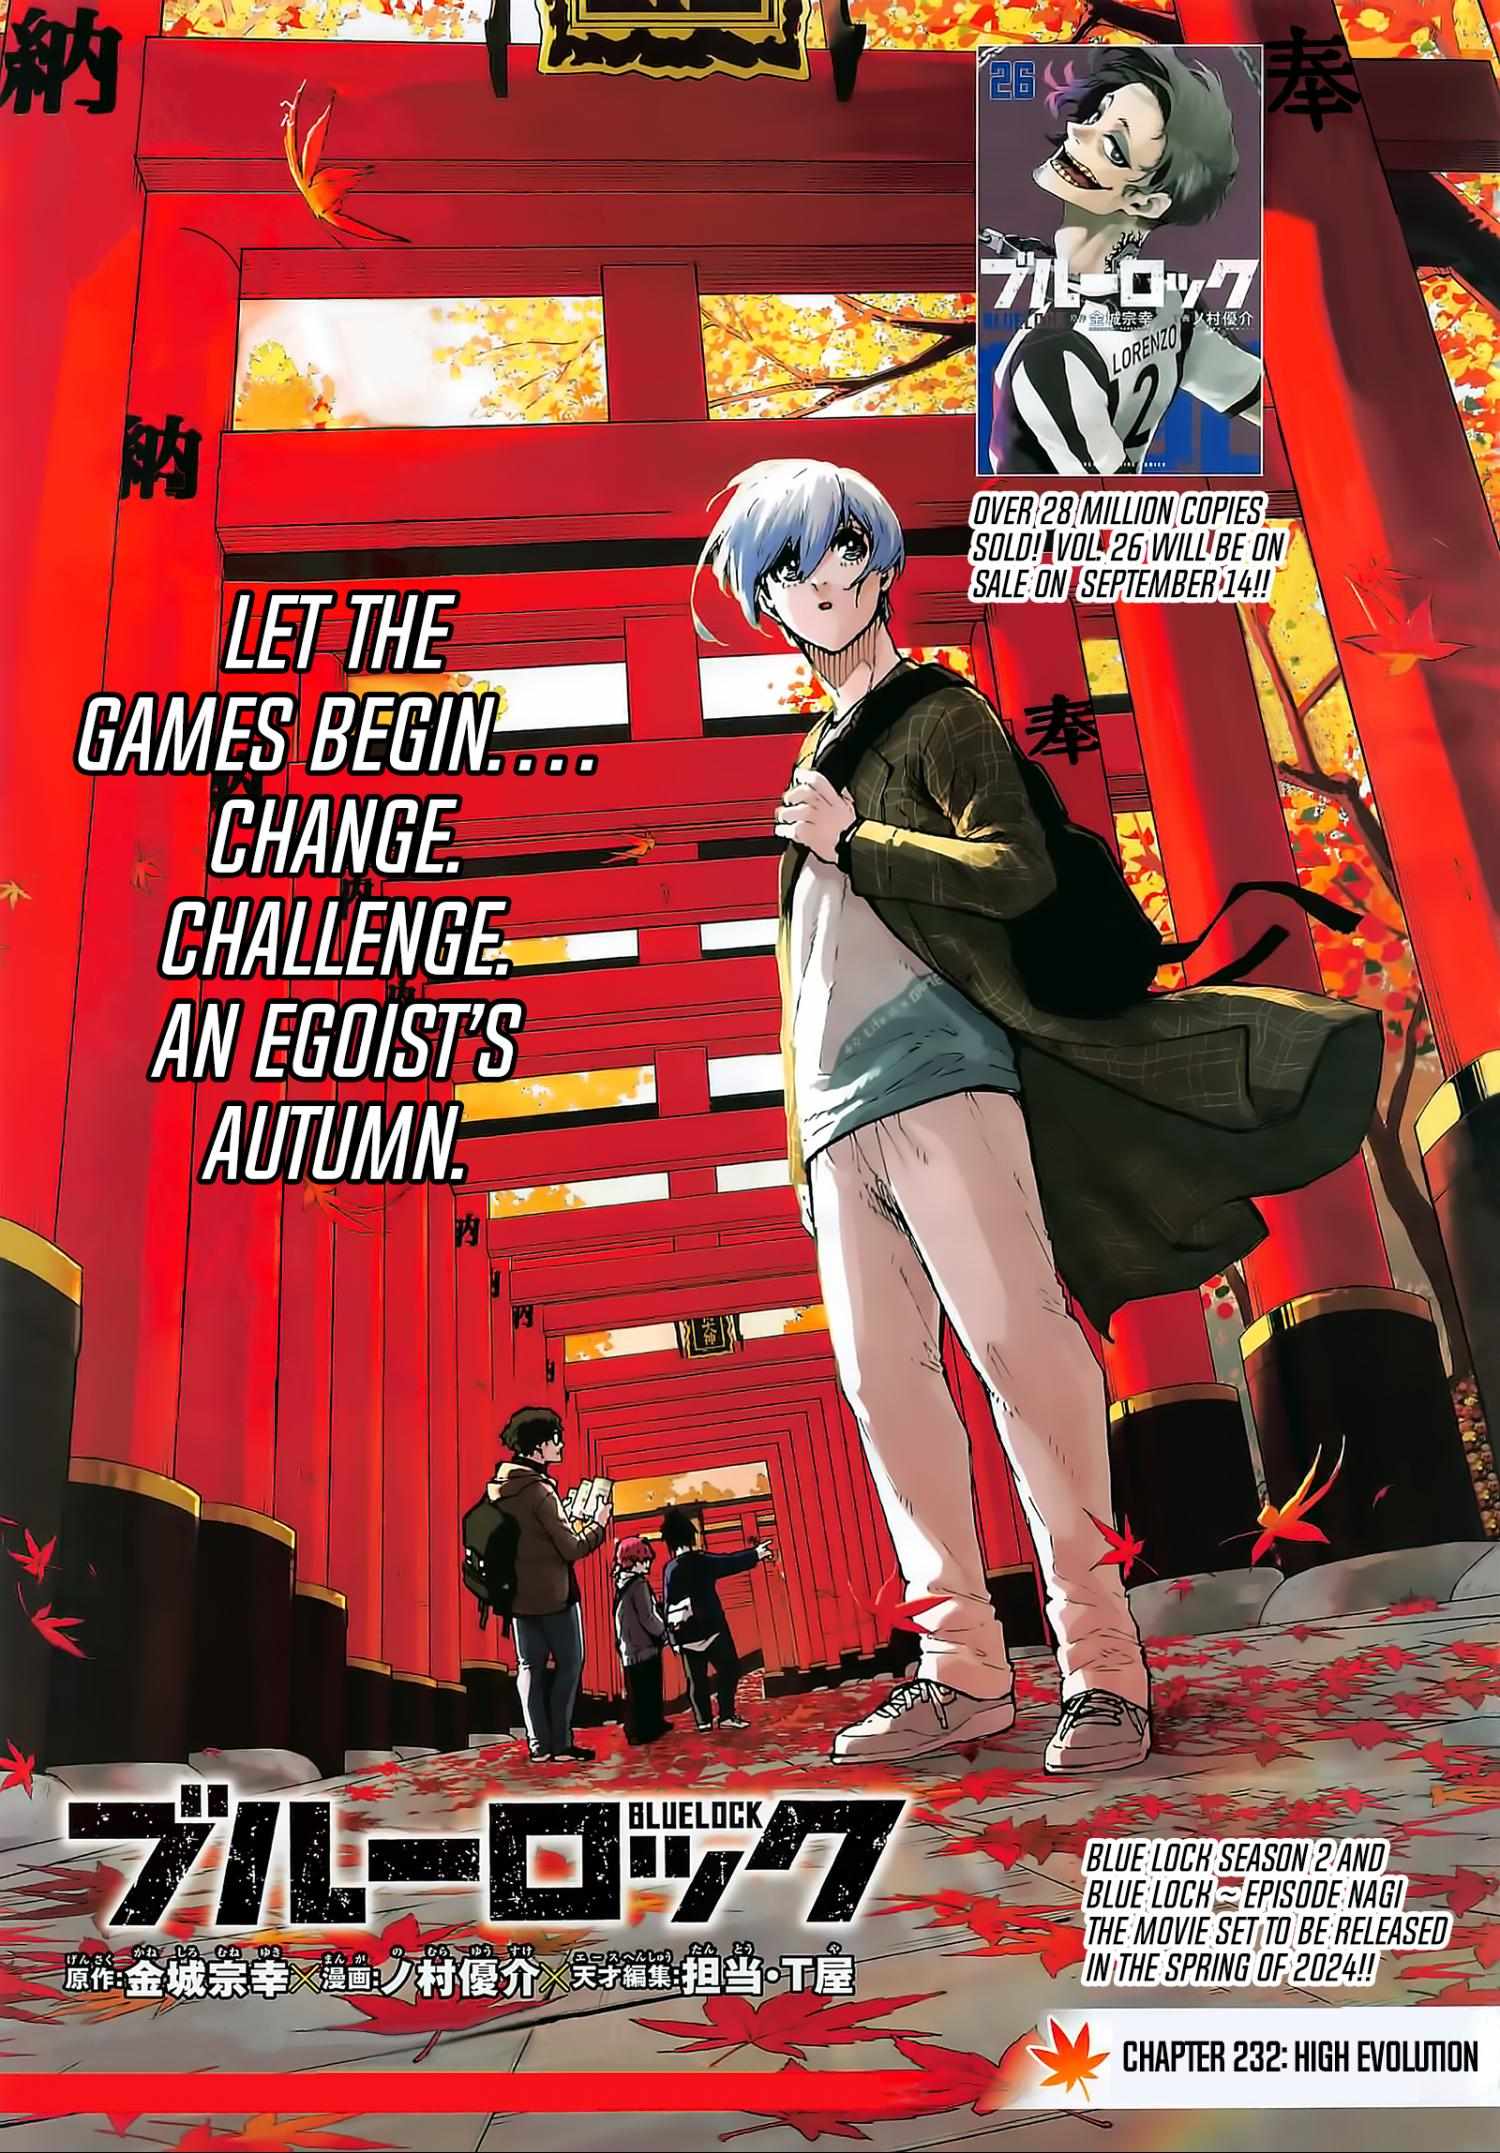 Blue Lock, Chapter 104 - Blue Lock Manga Online